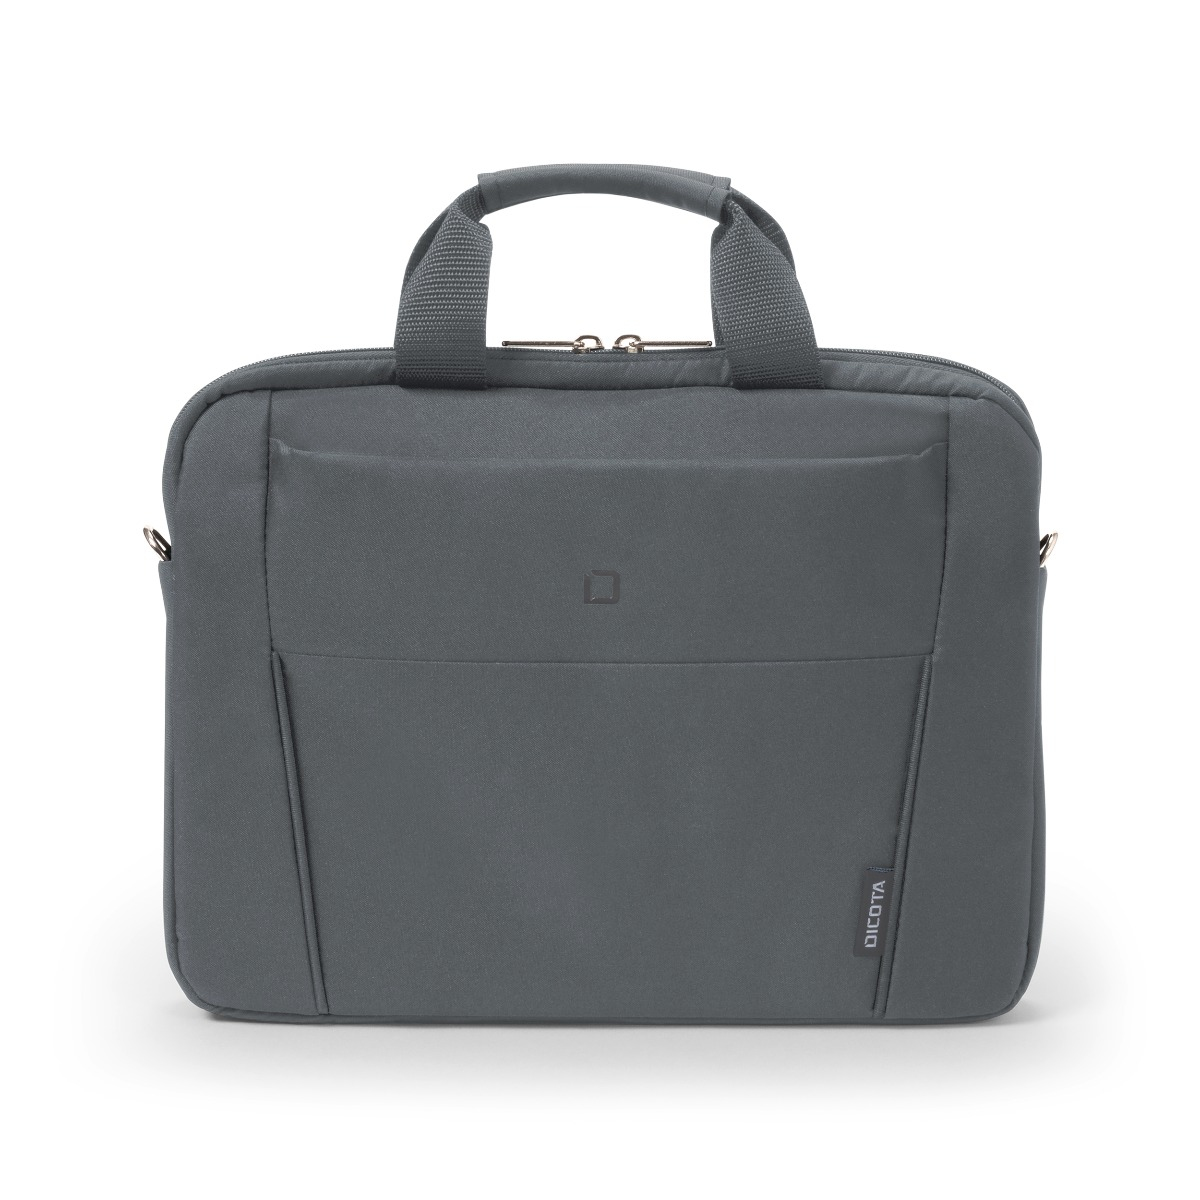 Dicota Slim Case Base Grey Laptop Bag Fits 13-14.1-Inch